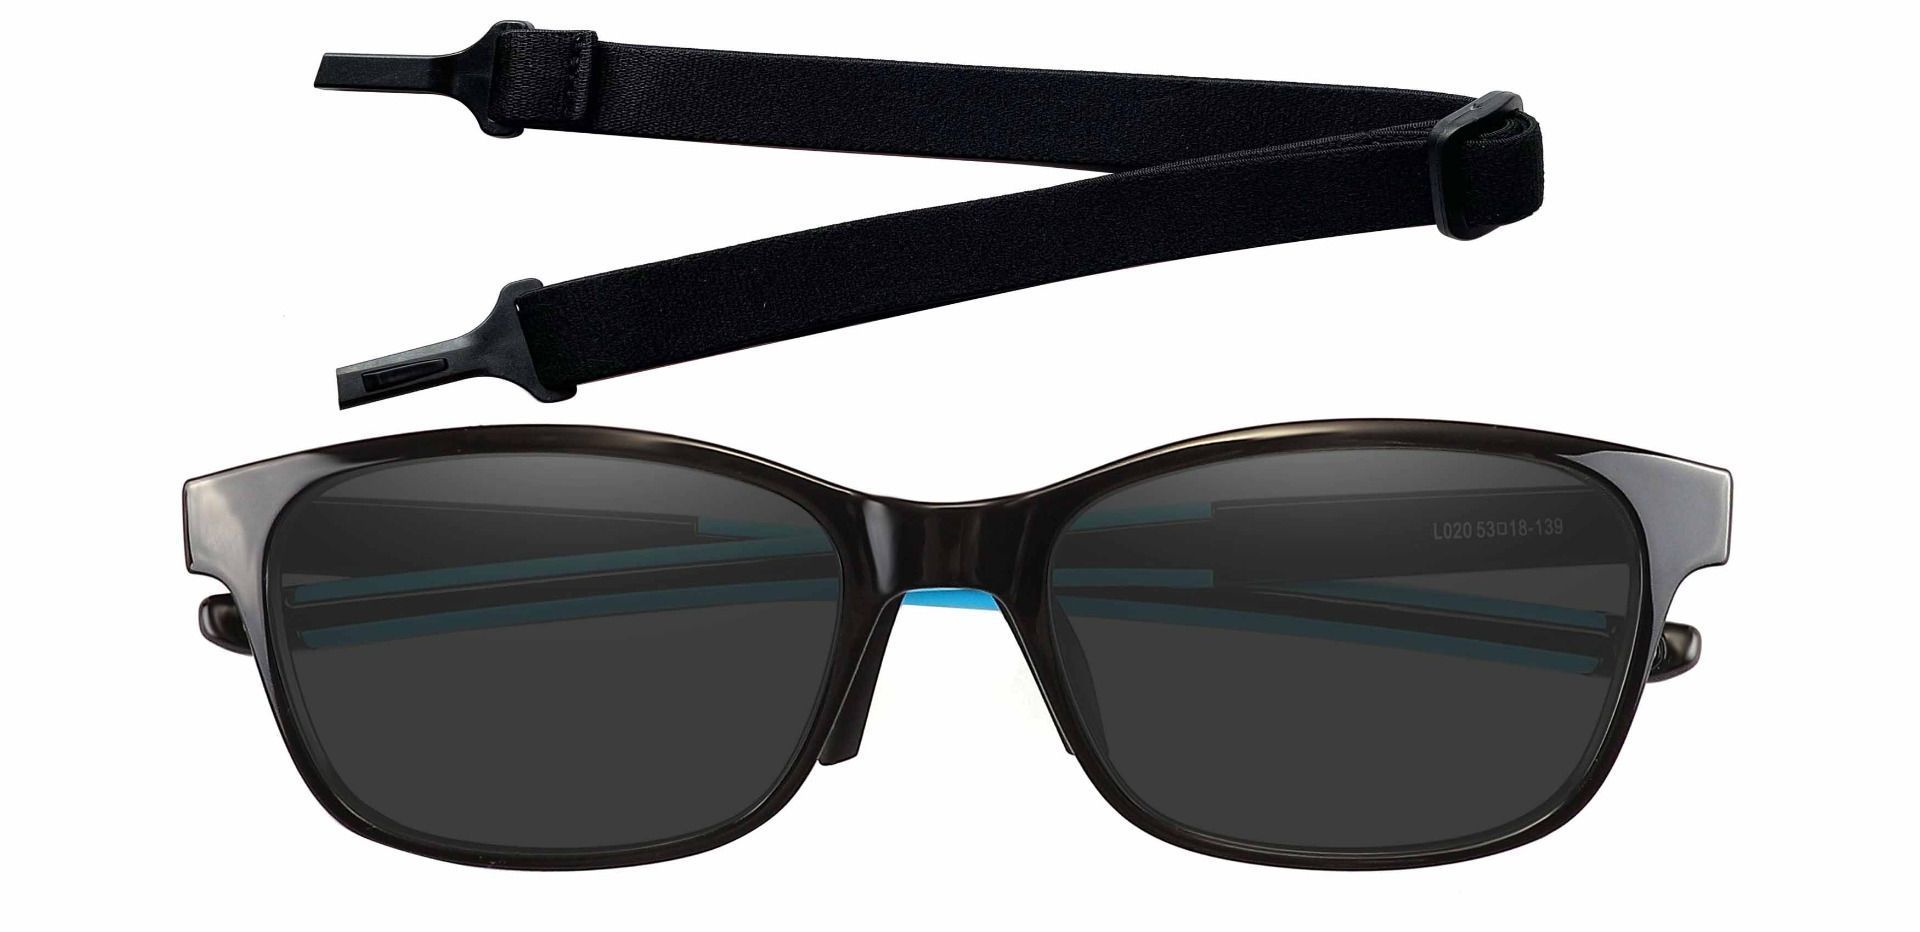 Higgins Rectangle Reading Sunglasses - Black Frame With Gray Lenses